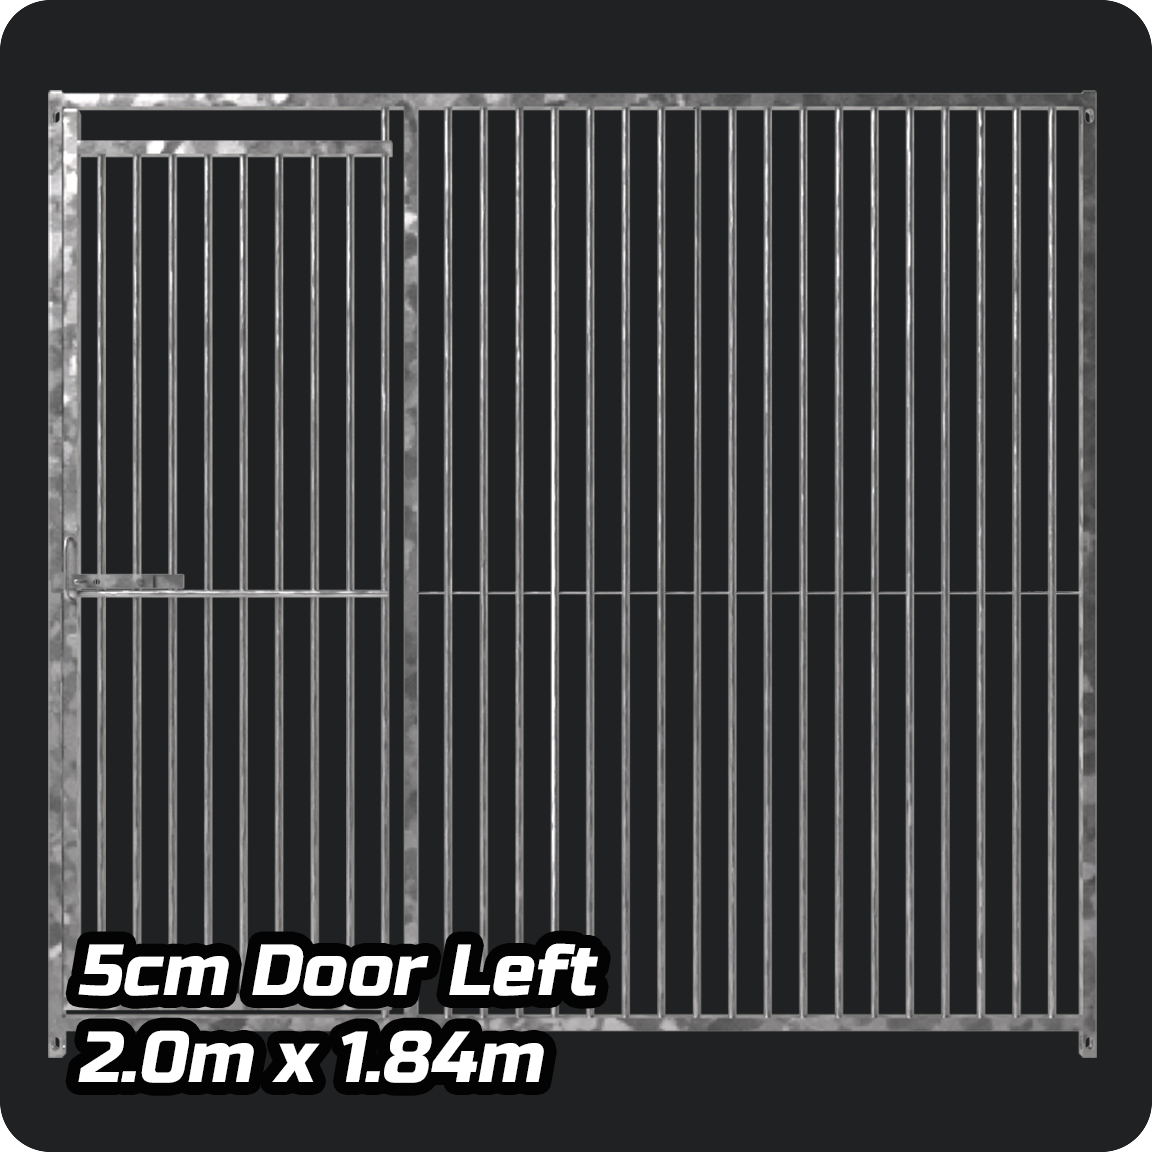 2m x 1.84m LEFT DOOR - Heavy duty Premium Galvanized - 5cm Gap Panels